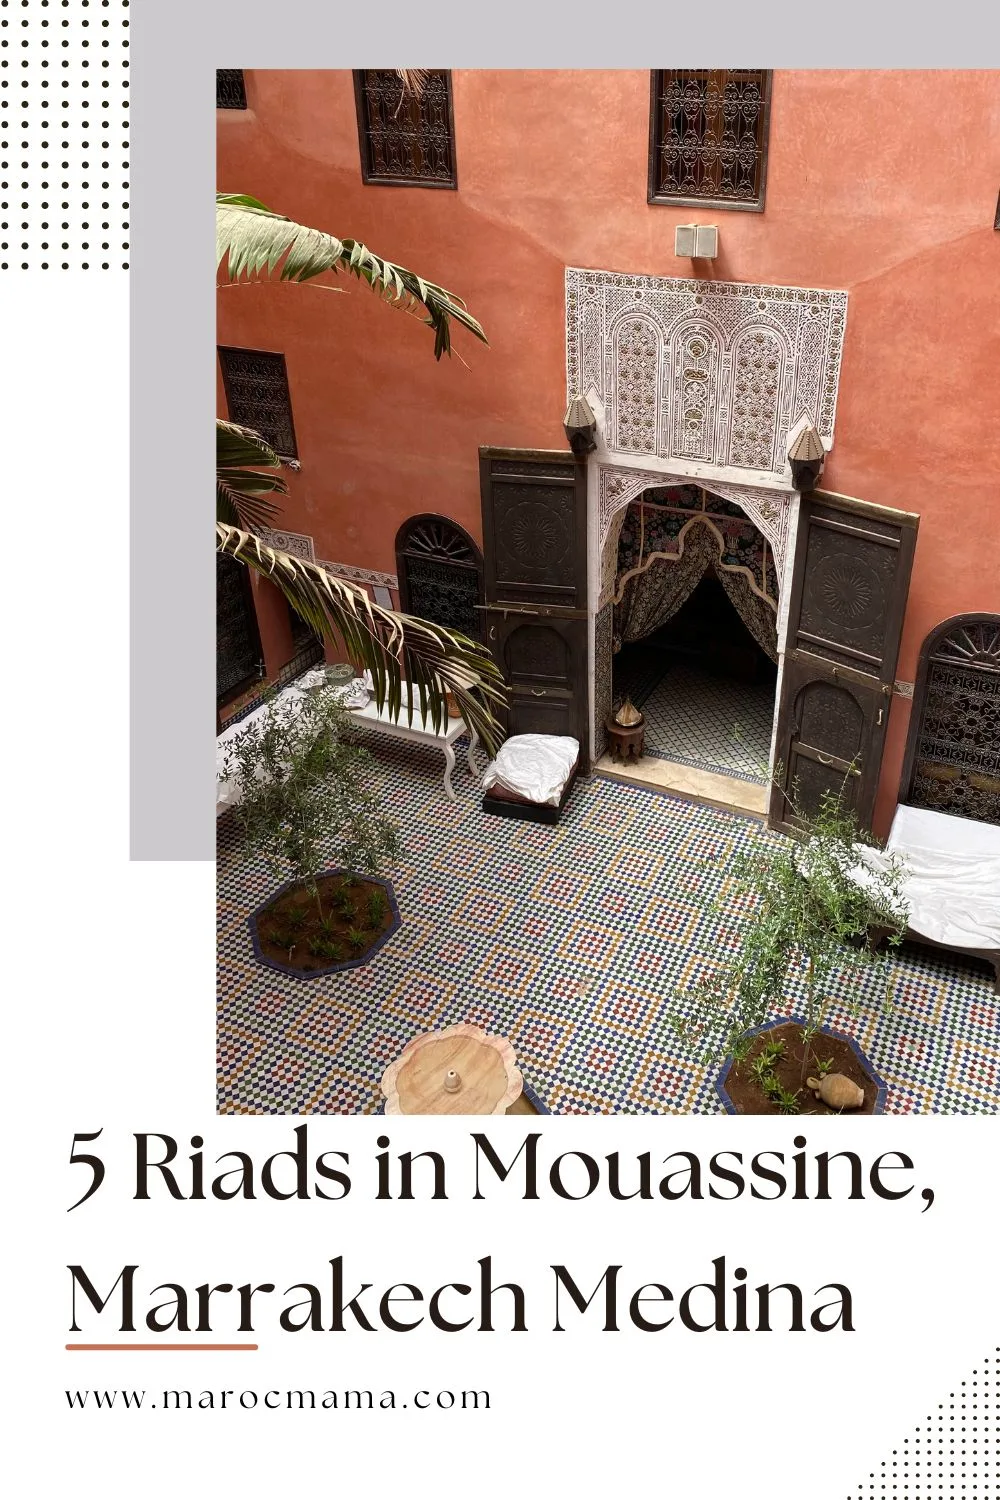 Interior of a riad in Mouassine, Marrakech Medina